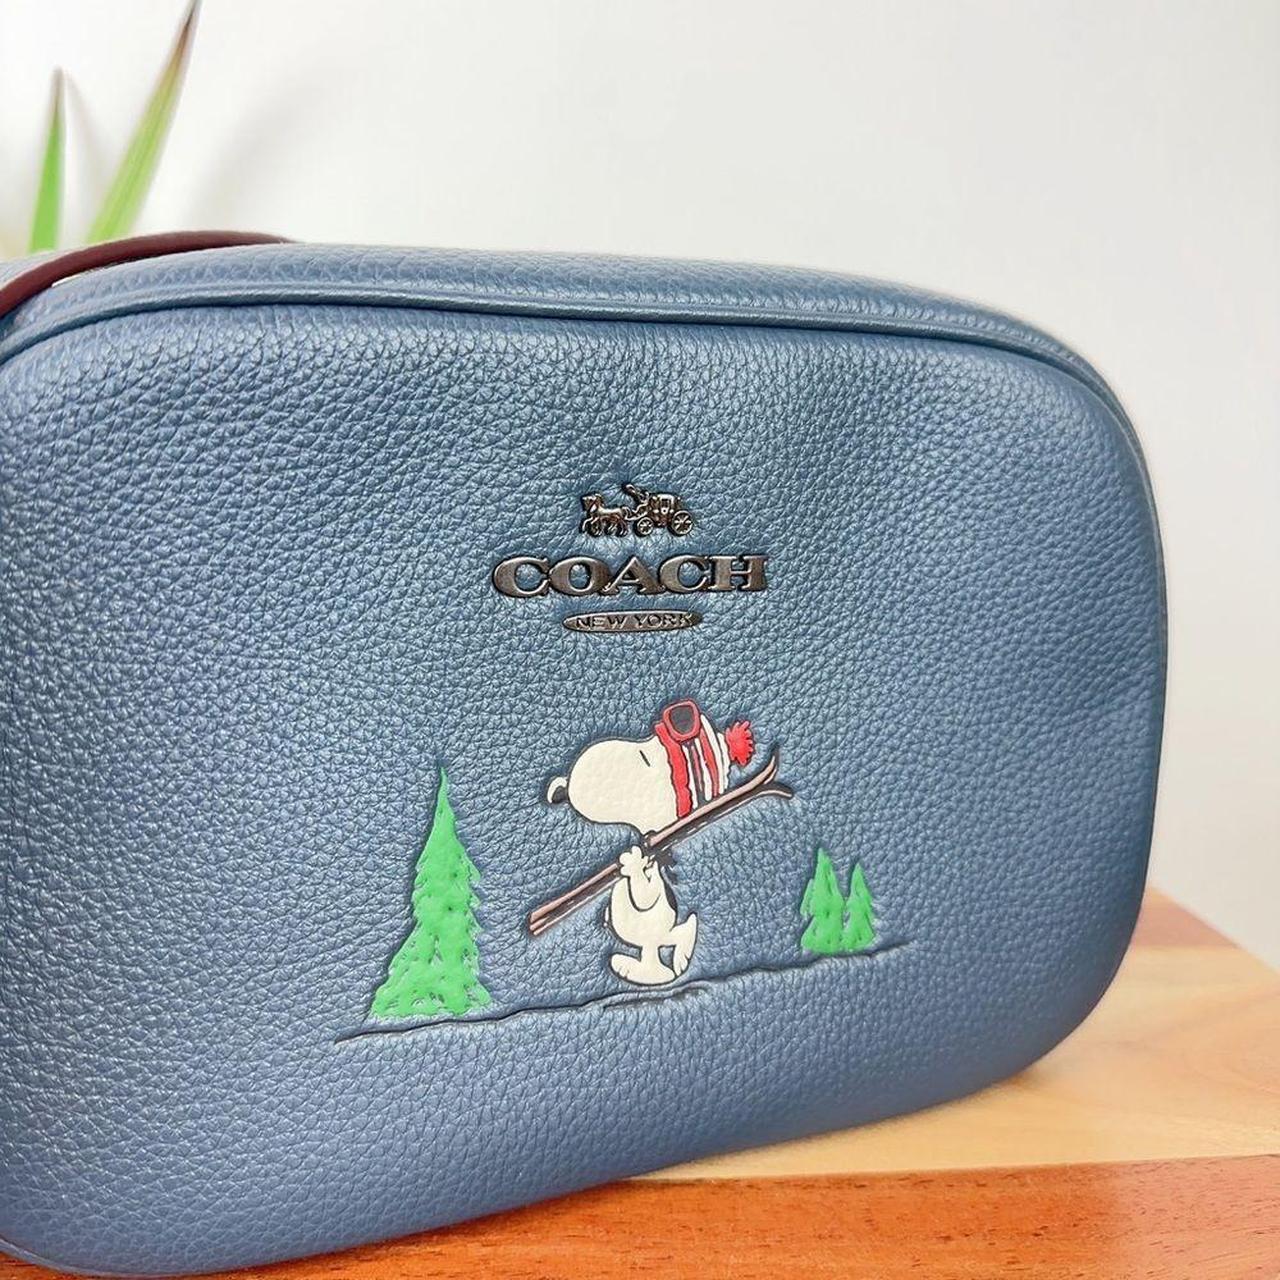 Coach x Peanuts Jamie Camera Bag with Snoopy Ski Motif